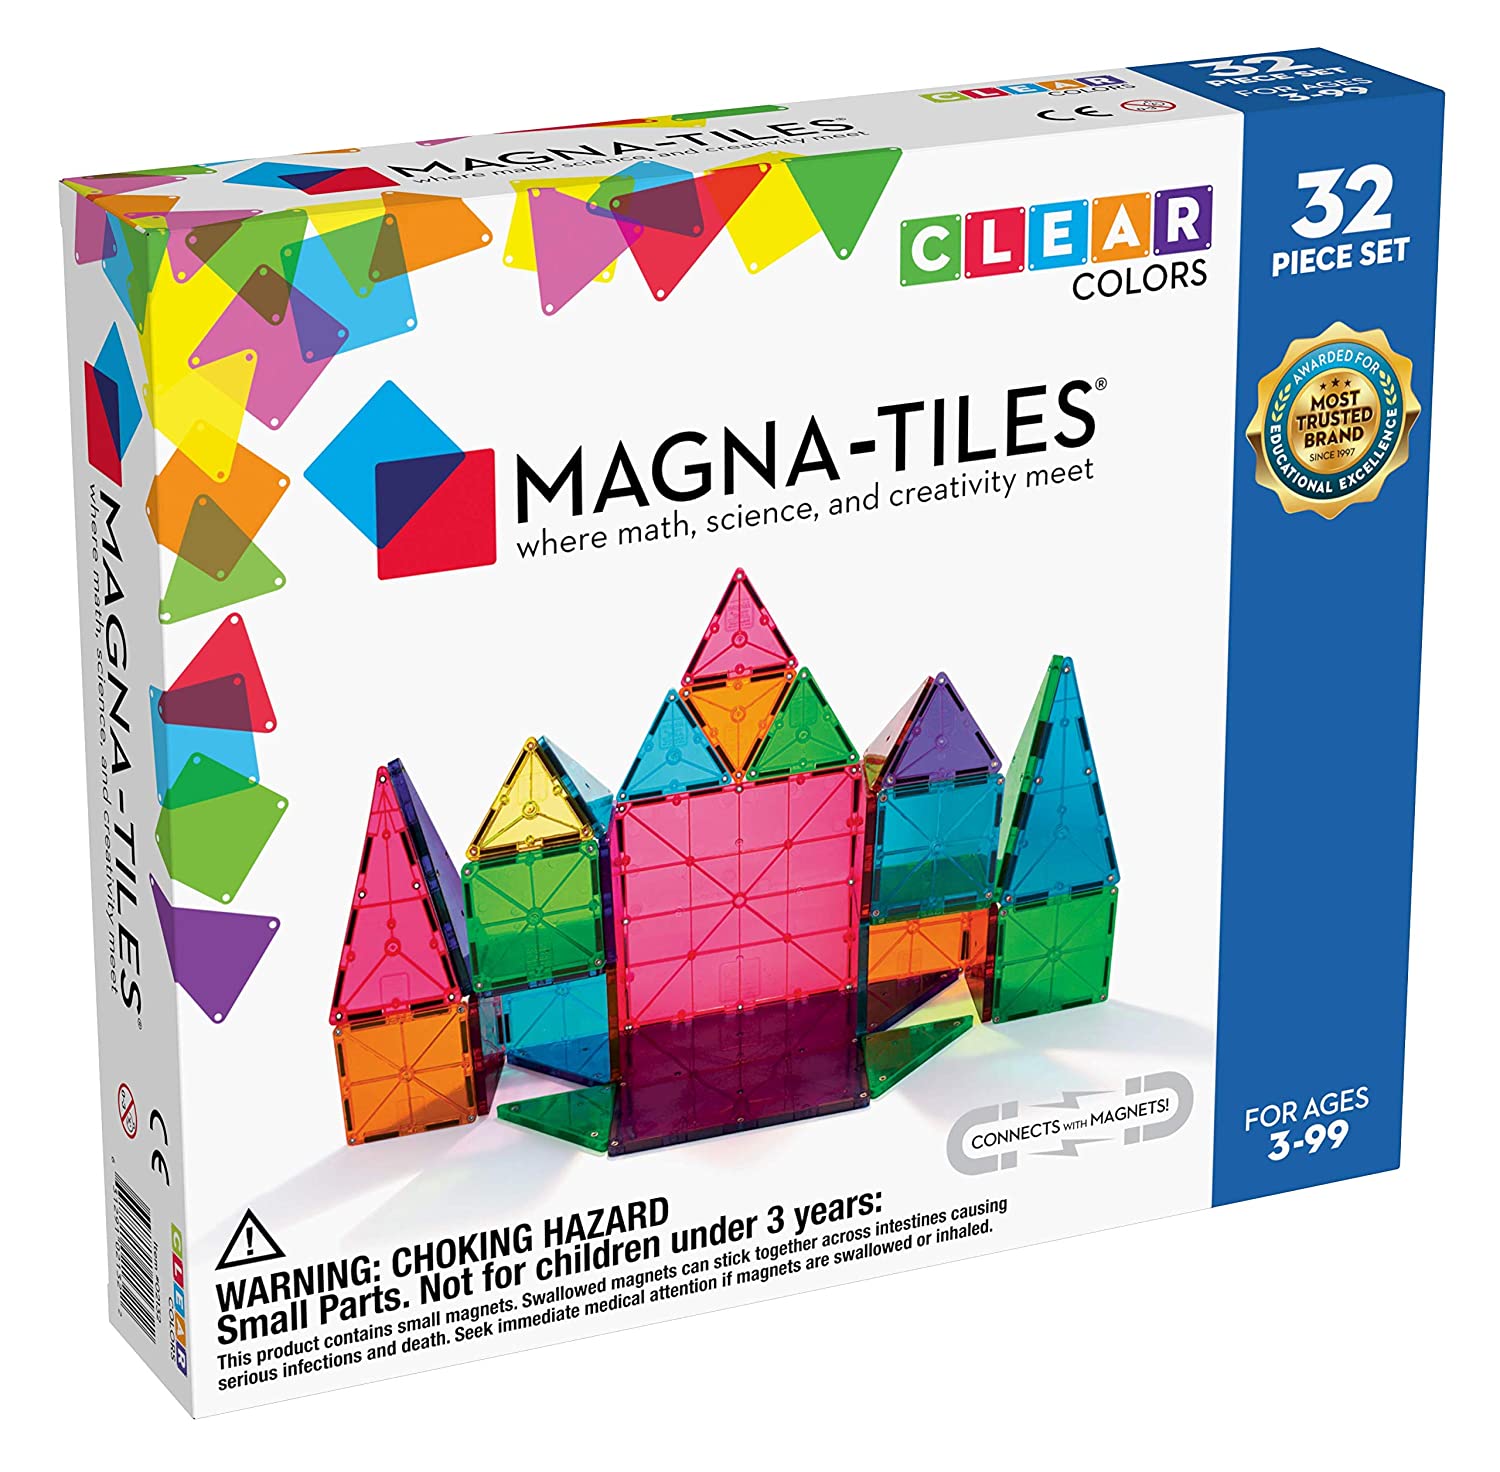 magna-tiles image